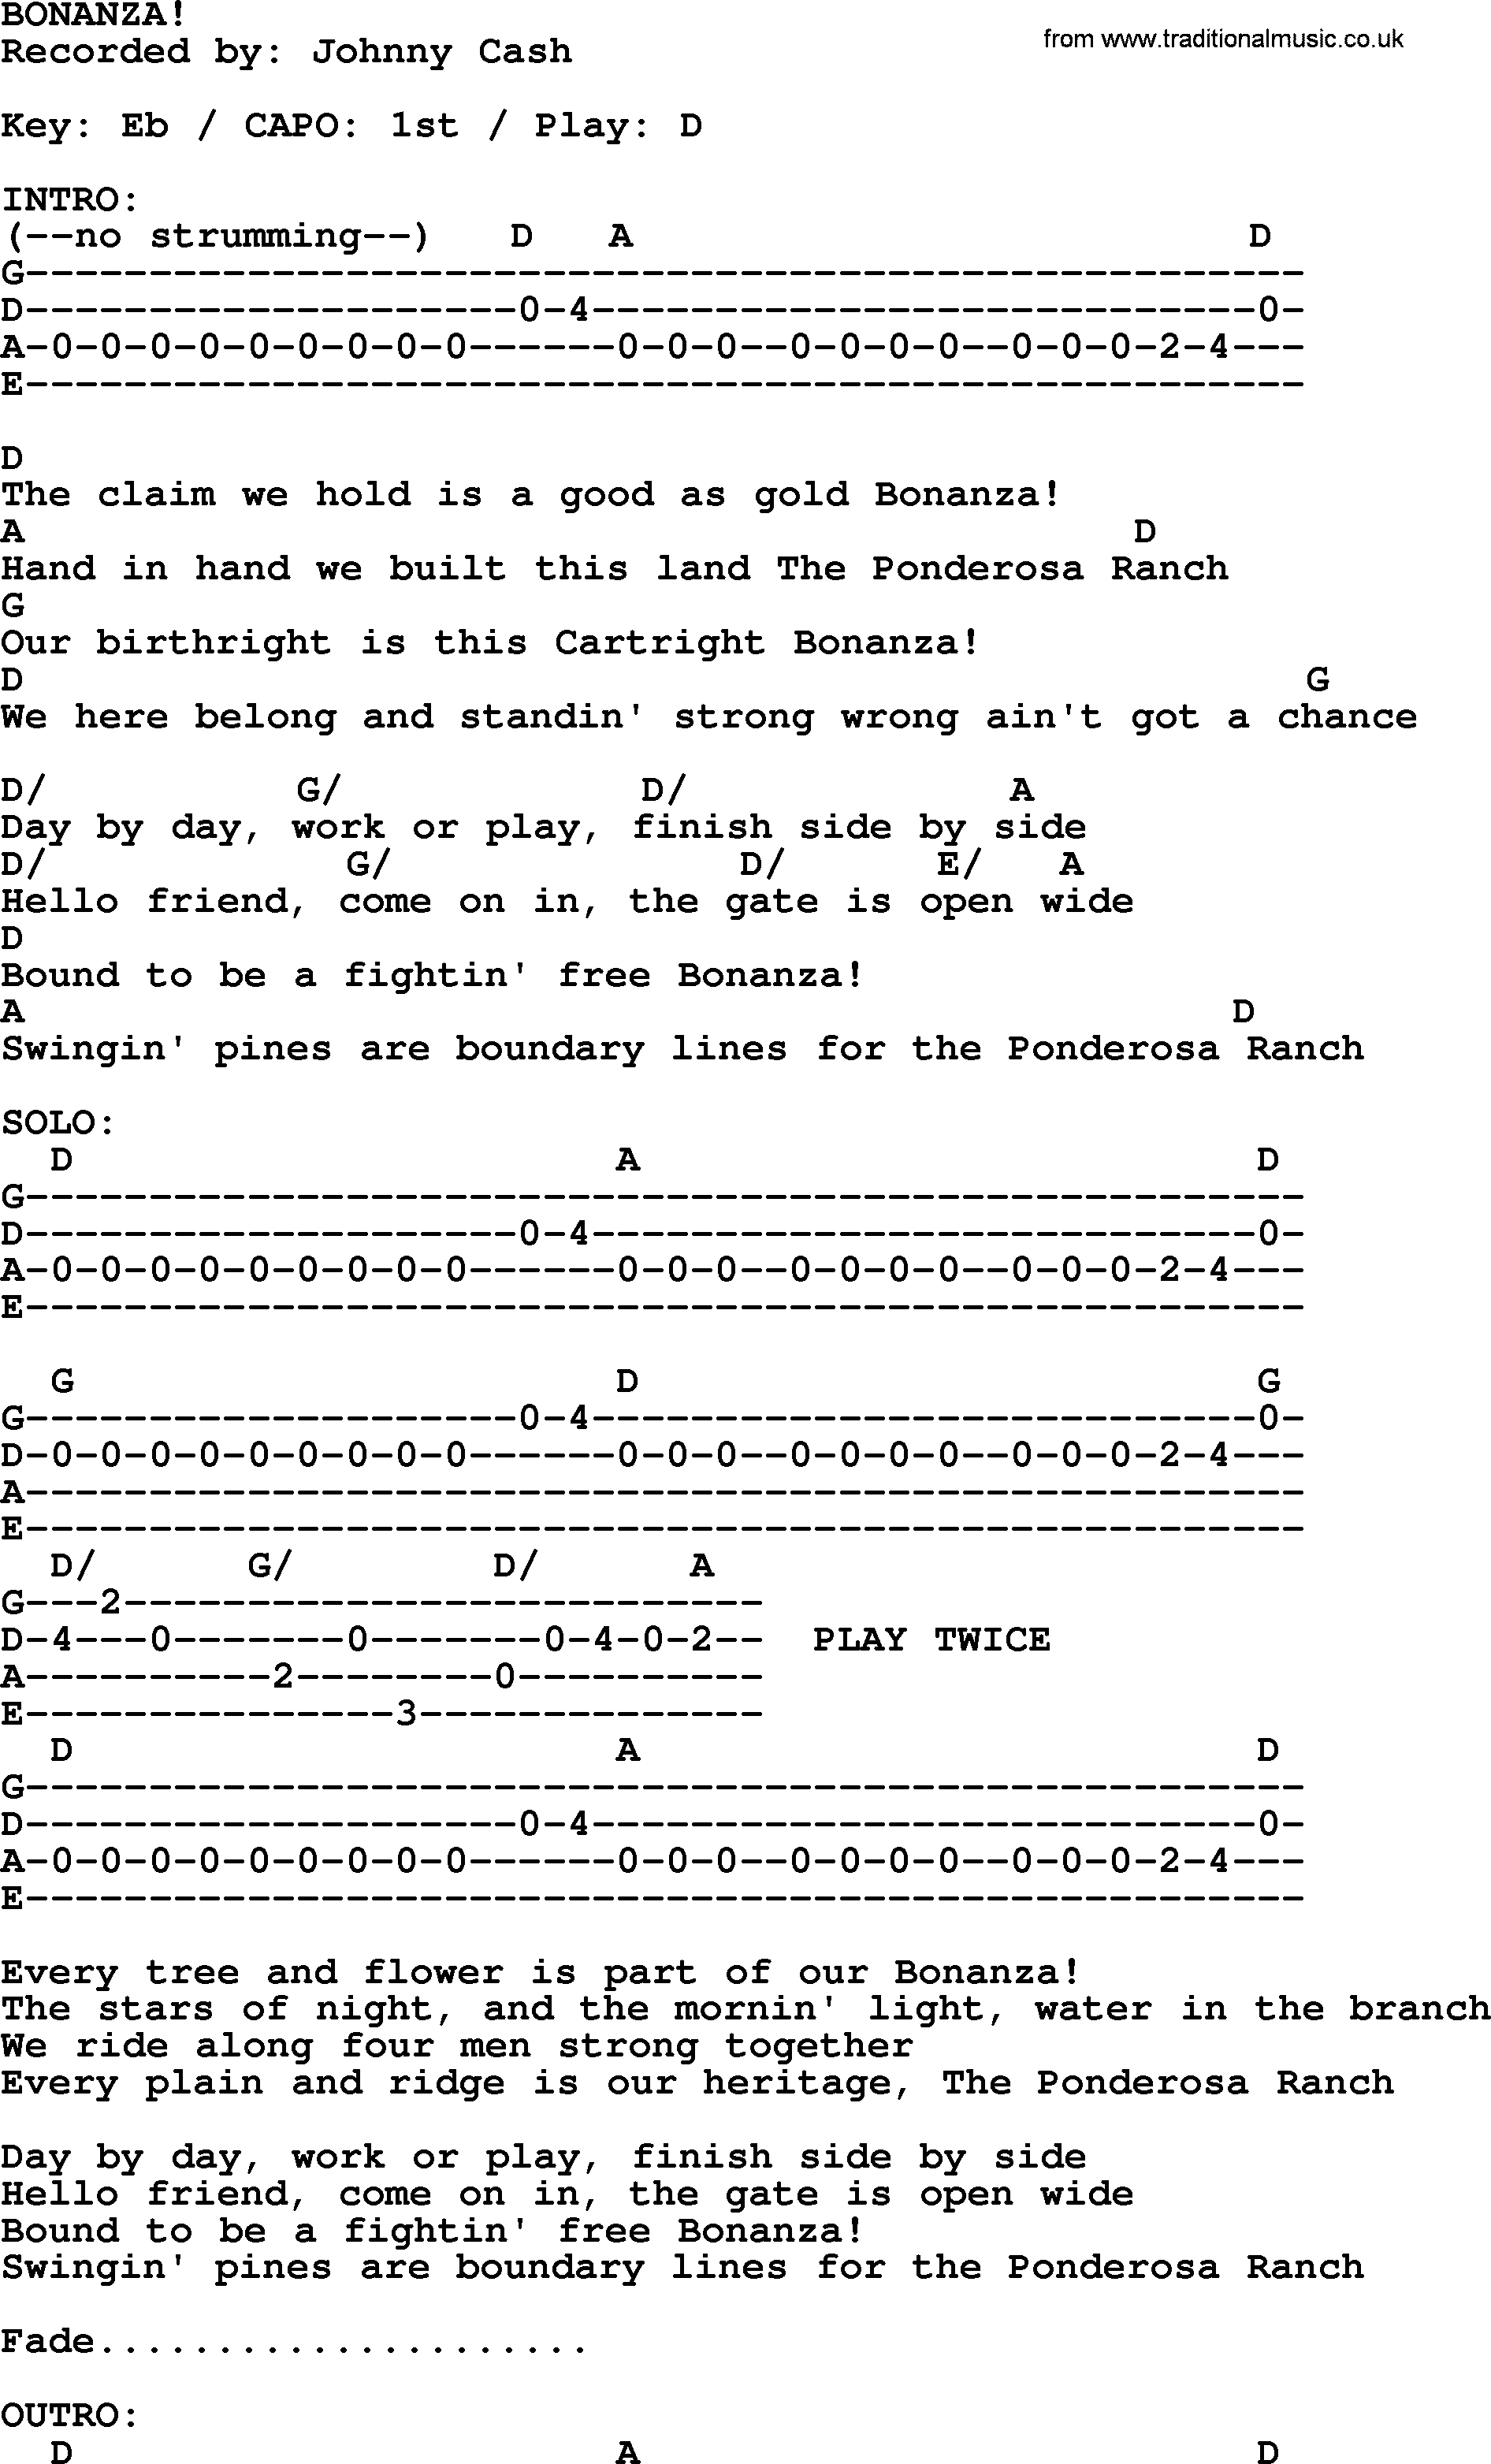 Johnny Cash song Bonanza!, lyrics and chords